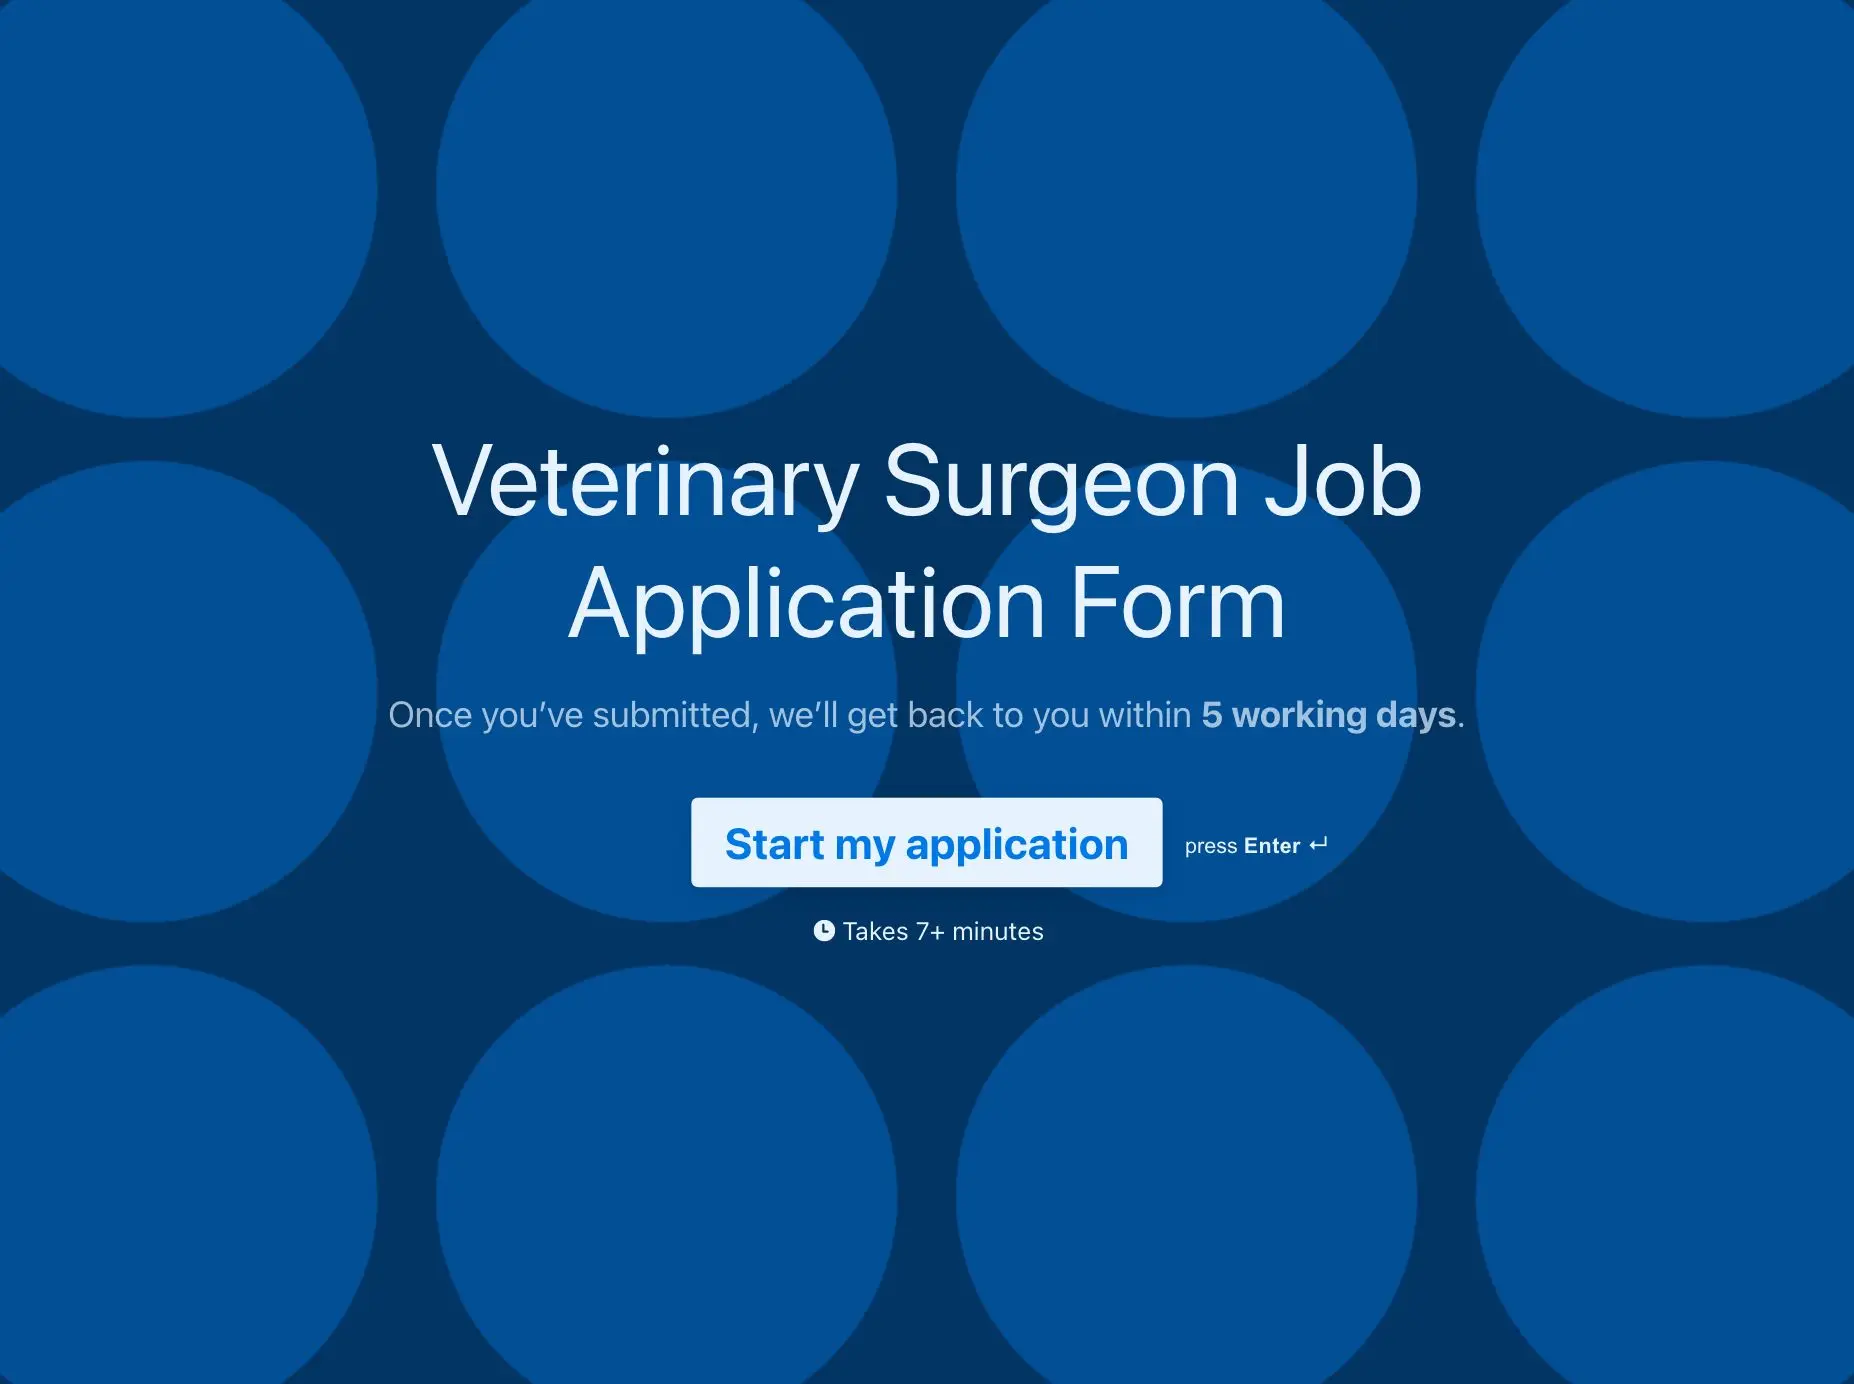 Veterinary Surgeon Job Application Form Template Hero